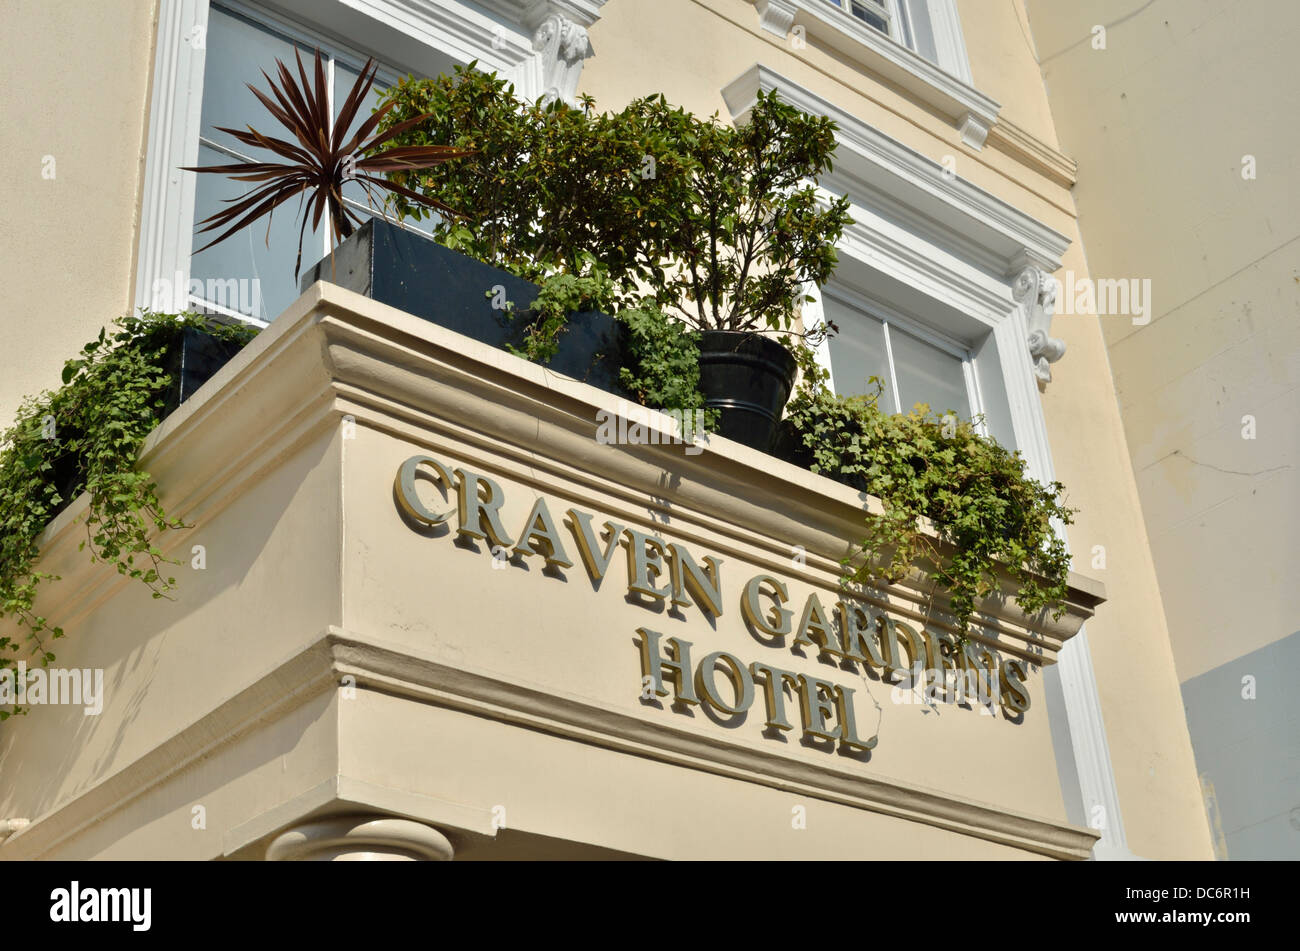 Craven Gardens Hotel, Bayswater, London, UK. Stock Photo